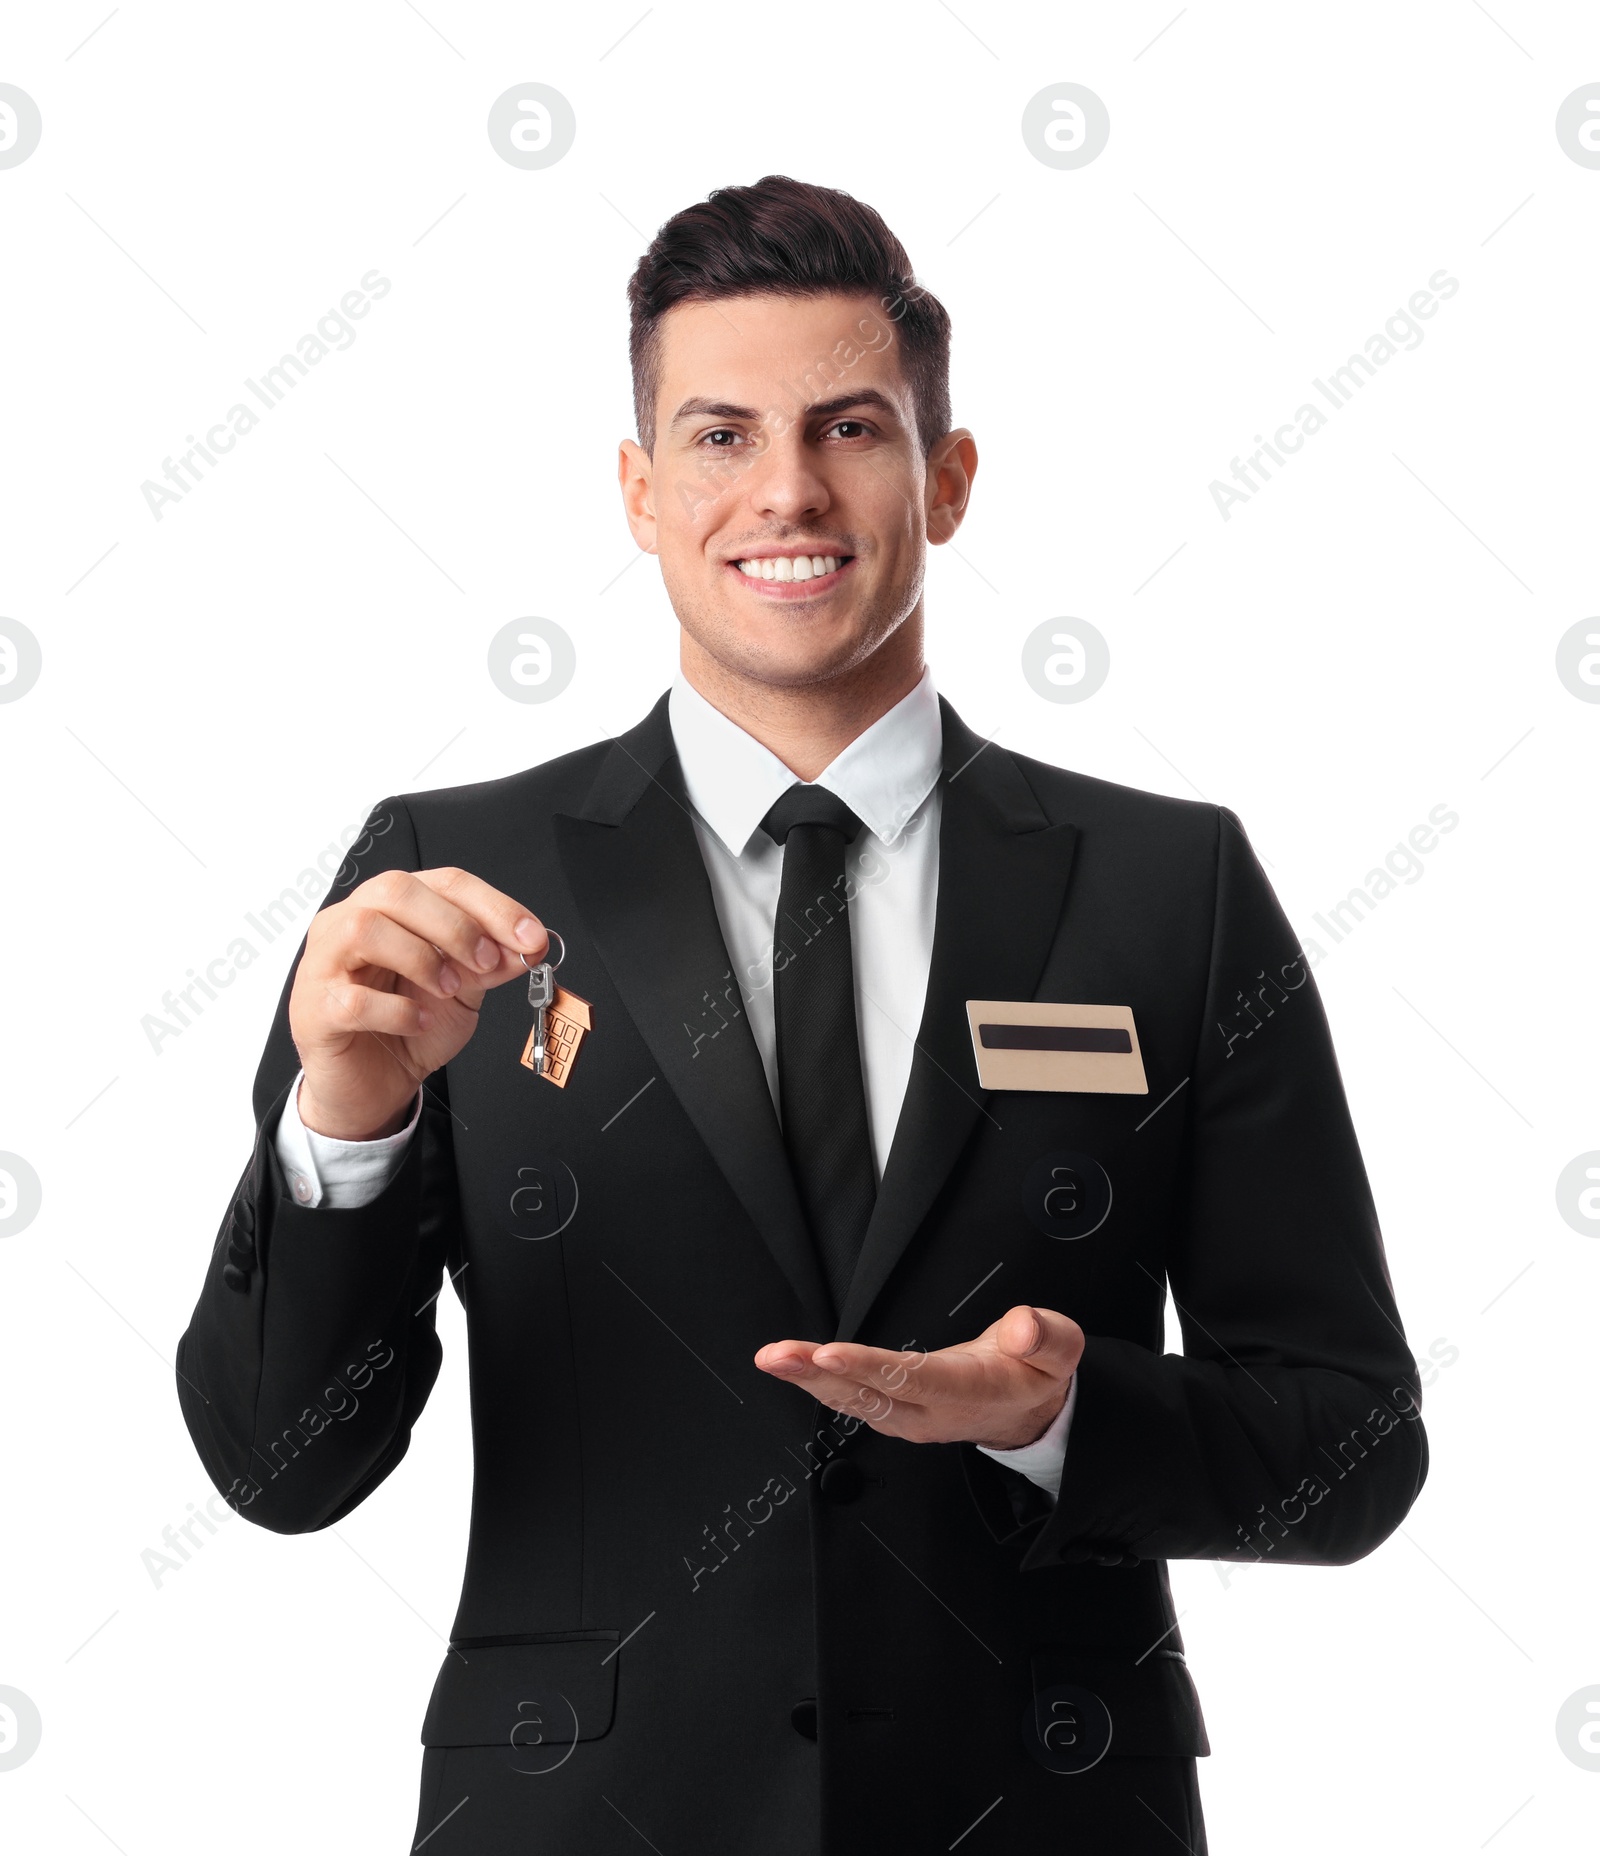 Photo of Happy receptionist in uniform holding key on white background